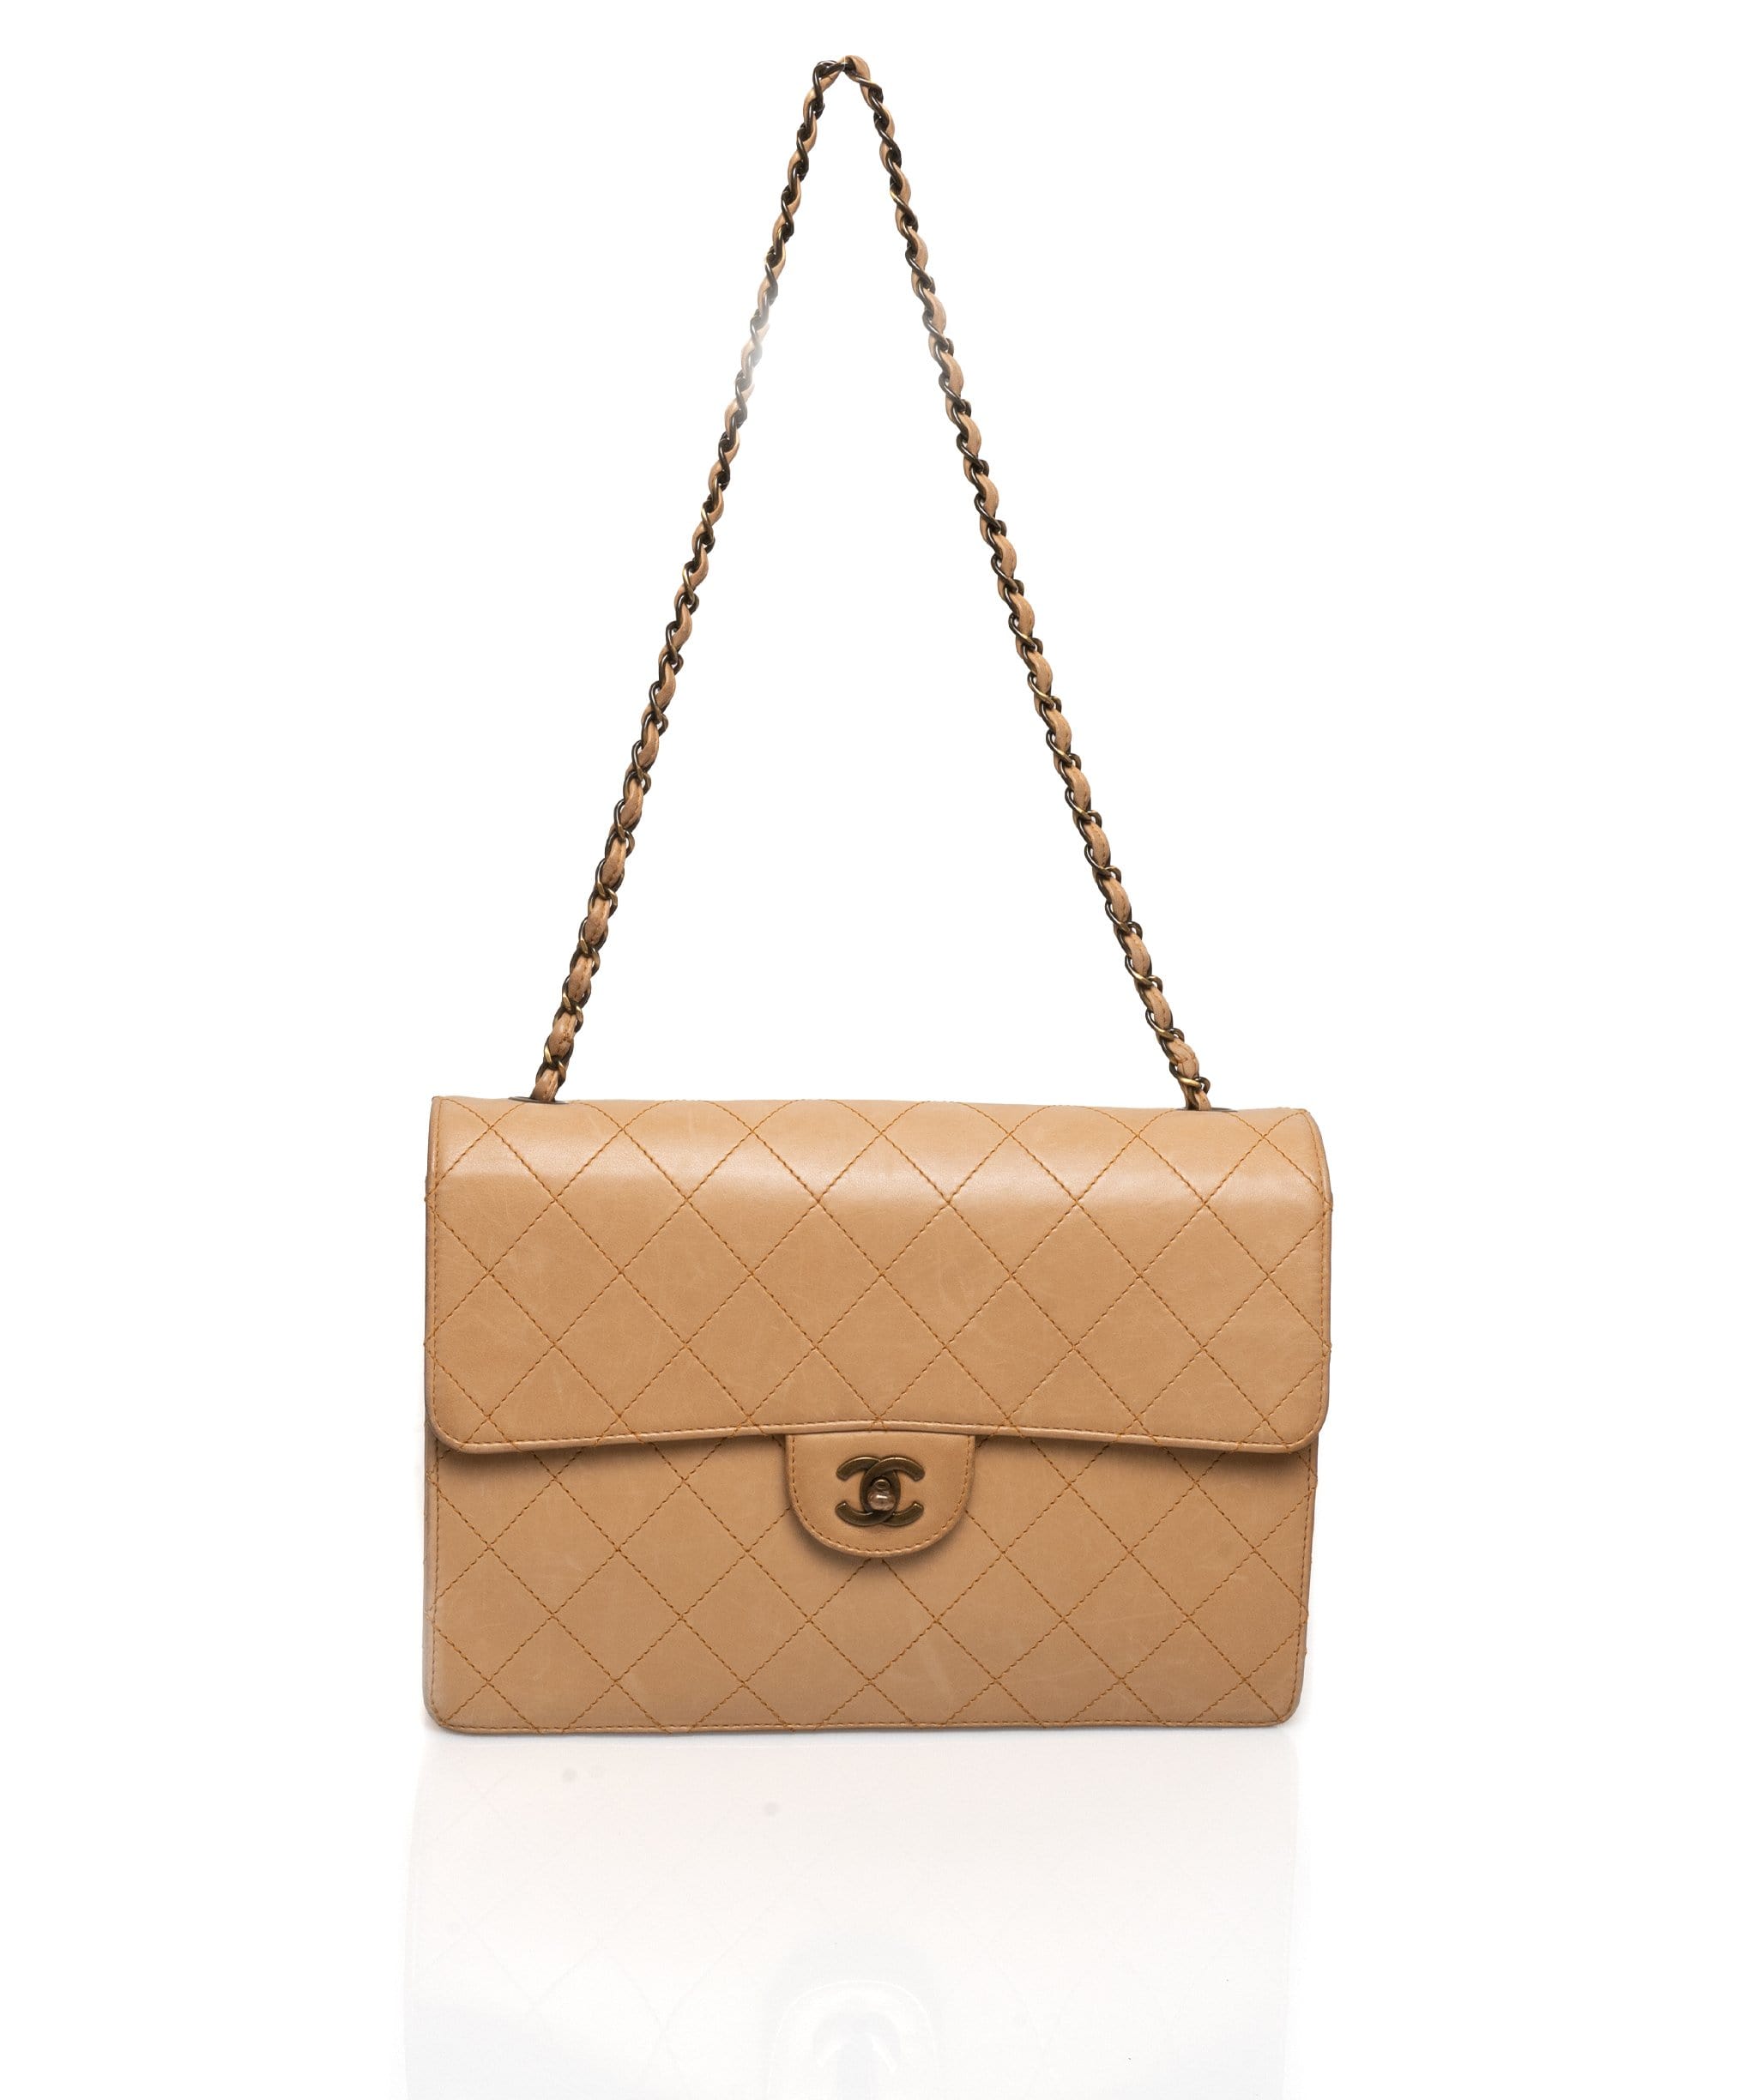 Chanel Chanel  Beige CC Timeless Lambskin Leather Jumbo Bag